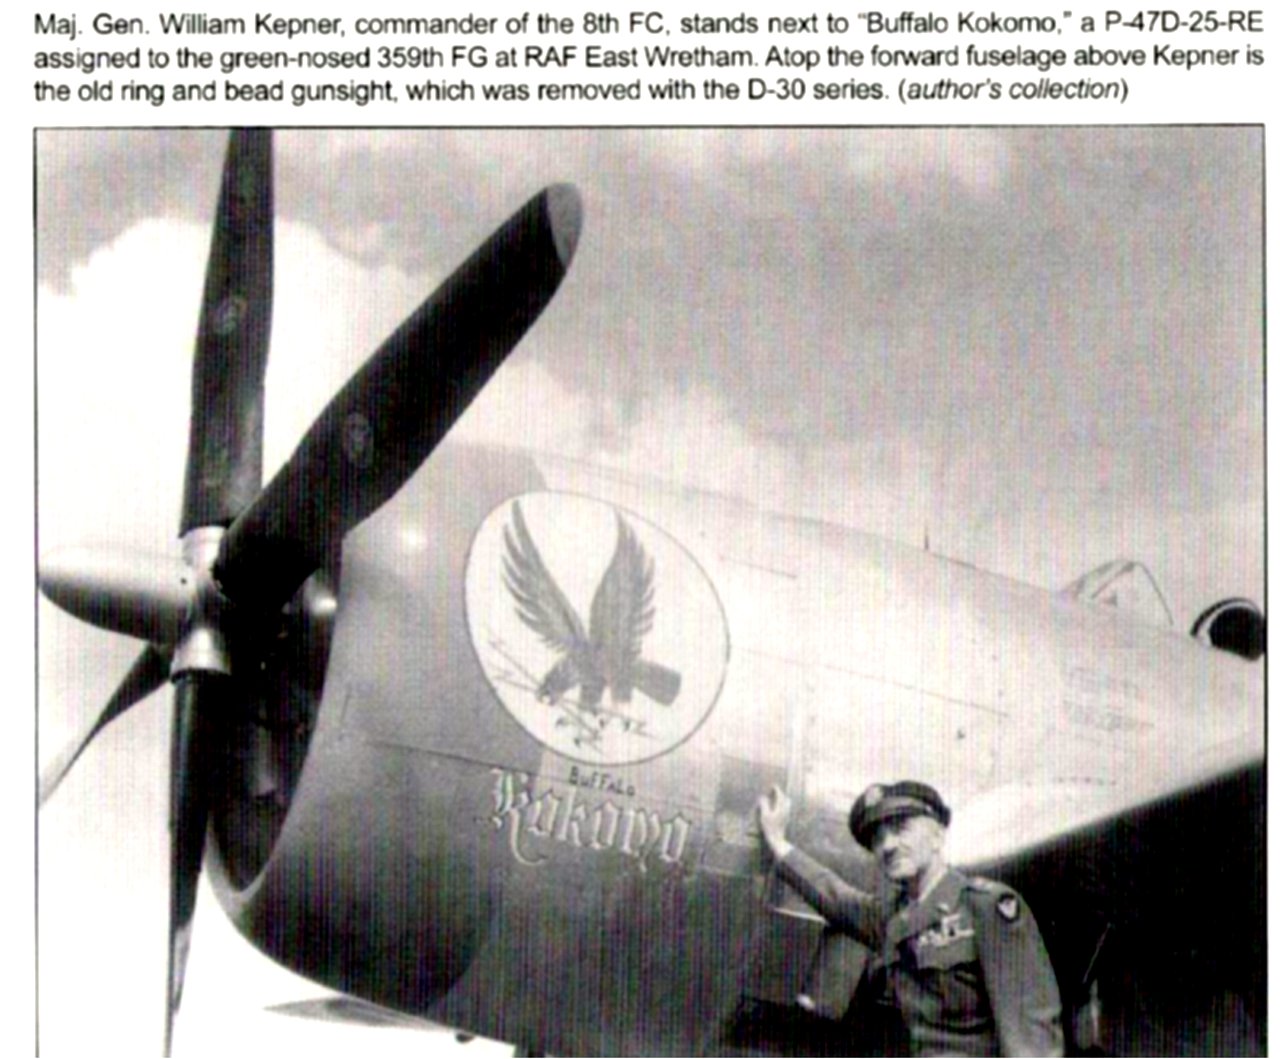 P-47D.jpg